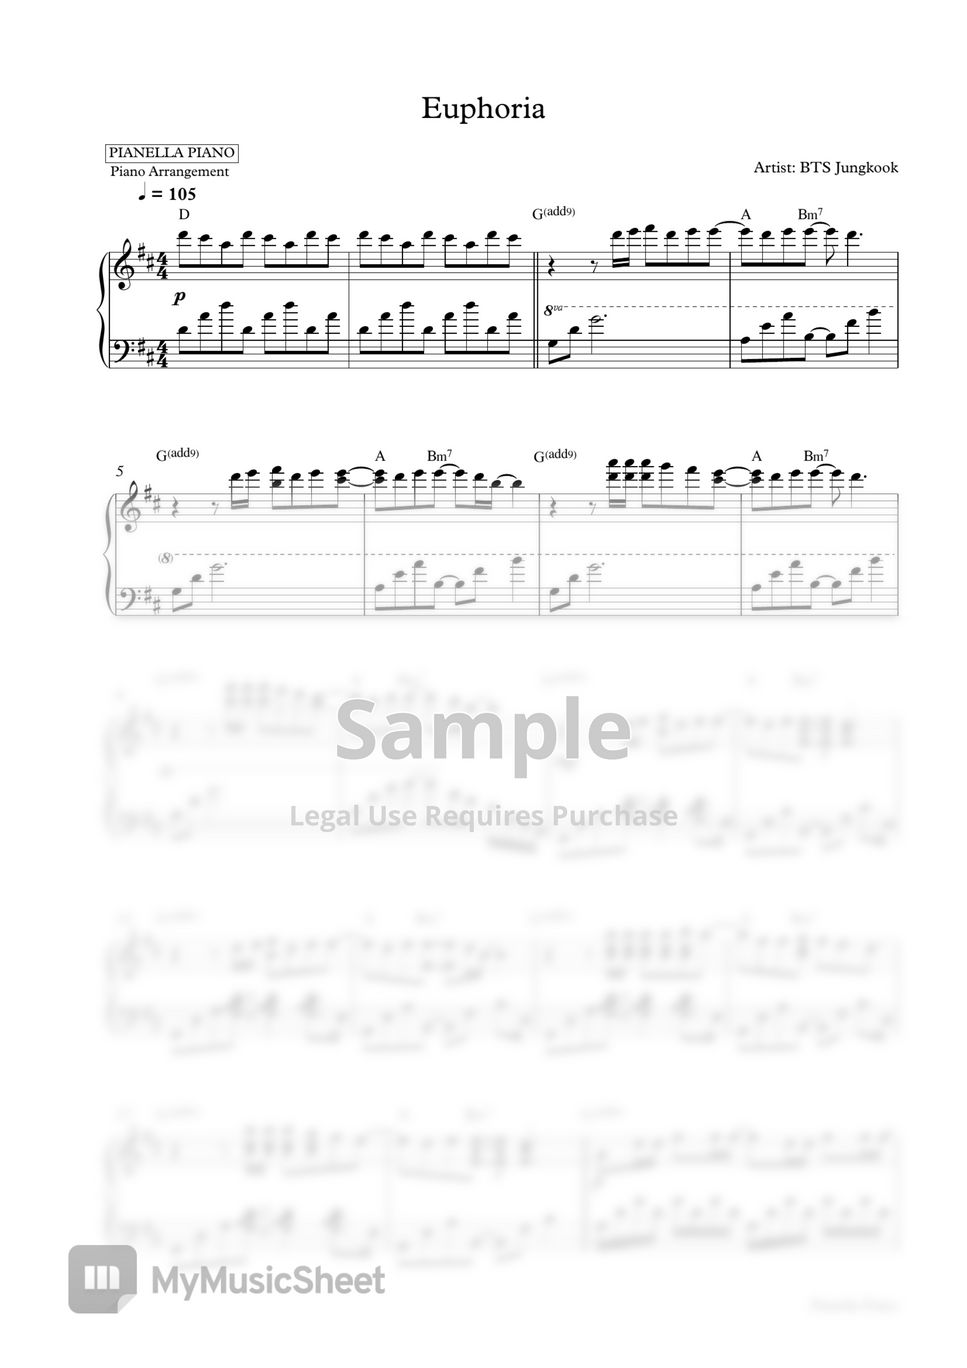 BTS Jungkook - Euphoria (Piano Sheet) by Pianella Piano